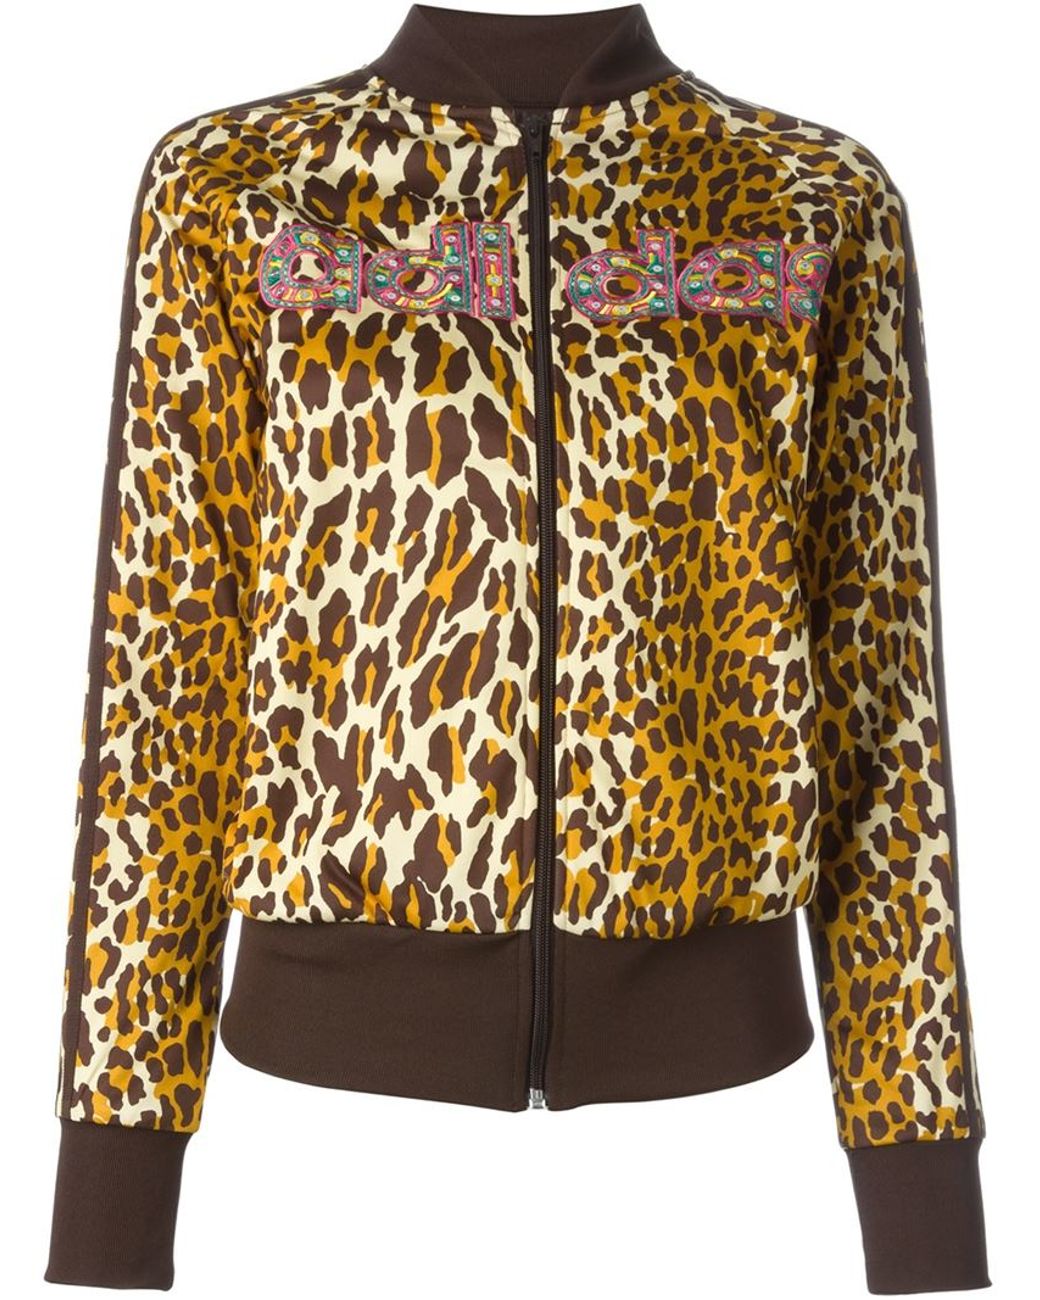 adidas Originals Jeremy Scott X Leopard-Print Jacket in Natural | Lyst UK